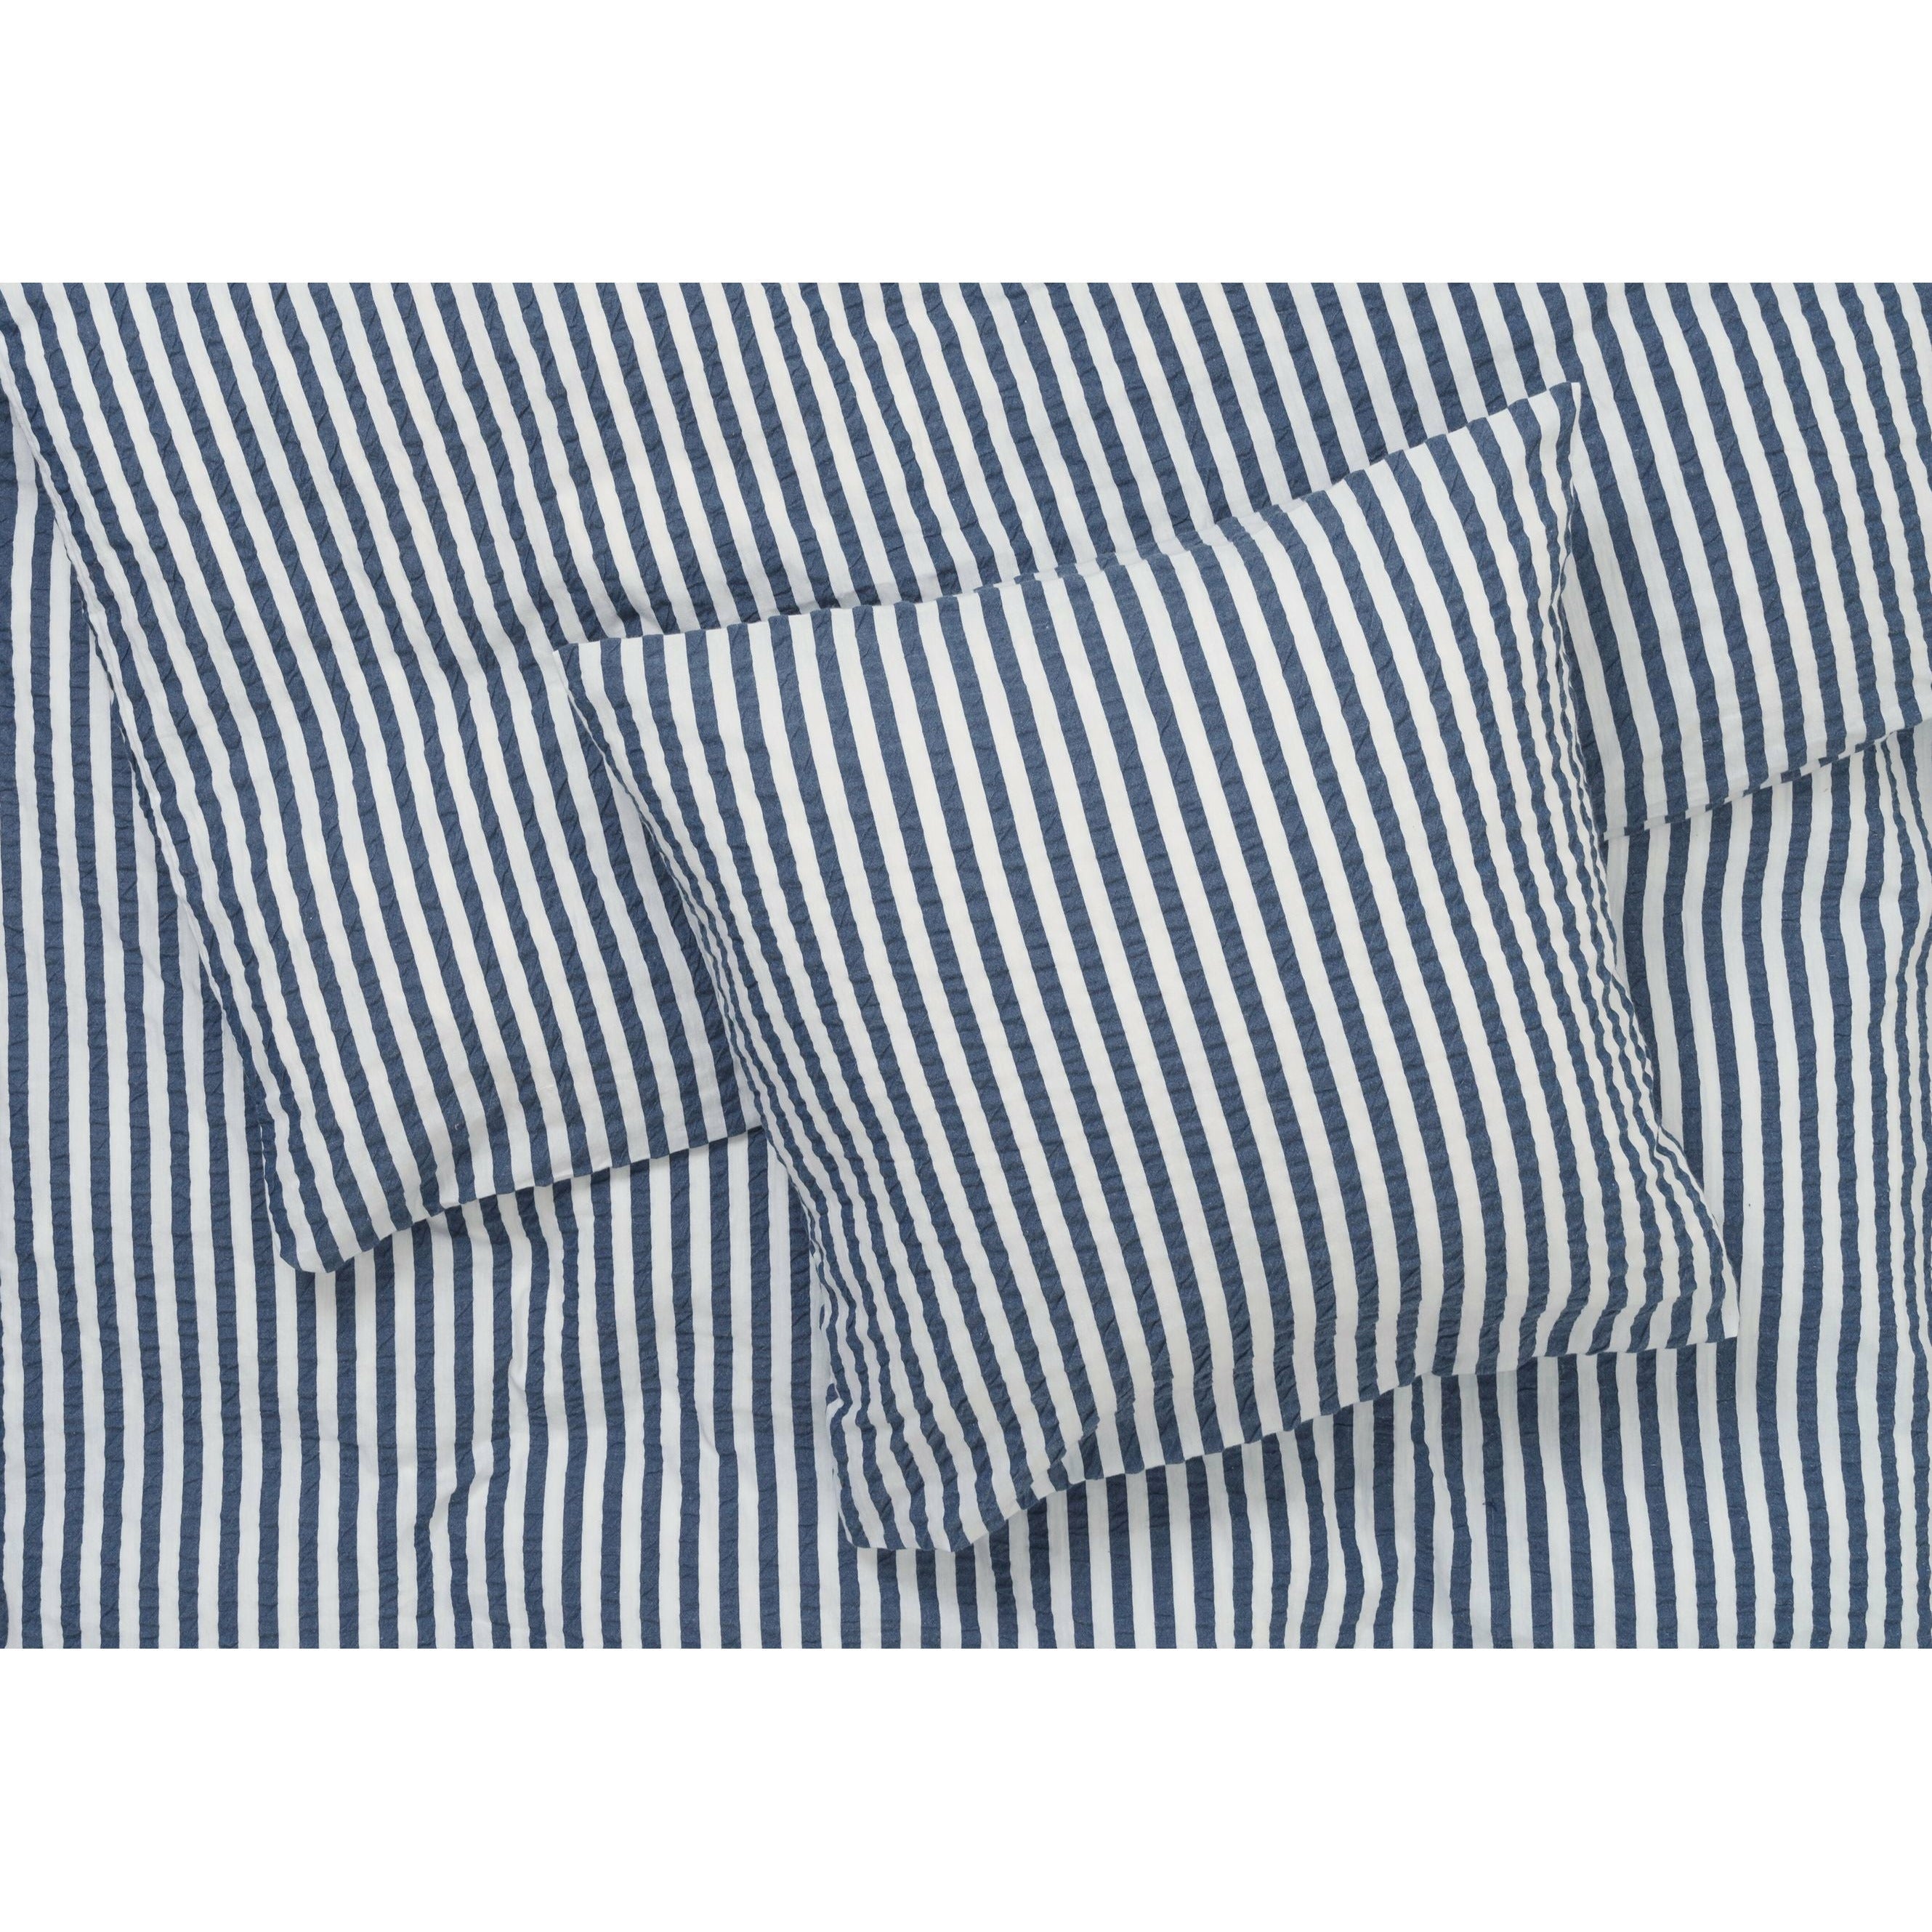 Juna Bæk & Bølge Lines Bed Linen 200x220 cm, ciemnoniebieski/biały